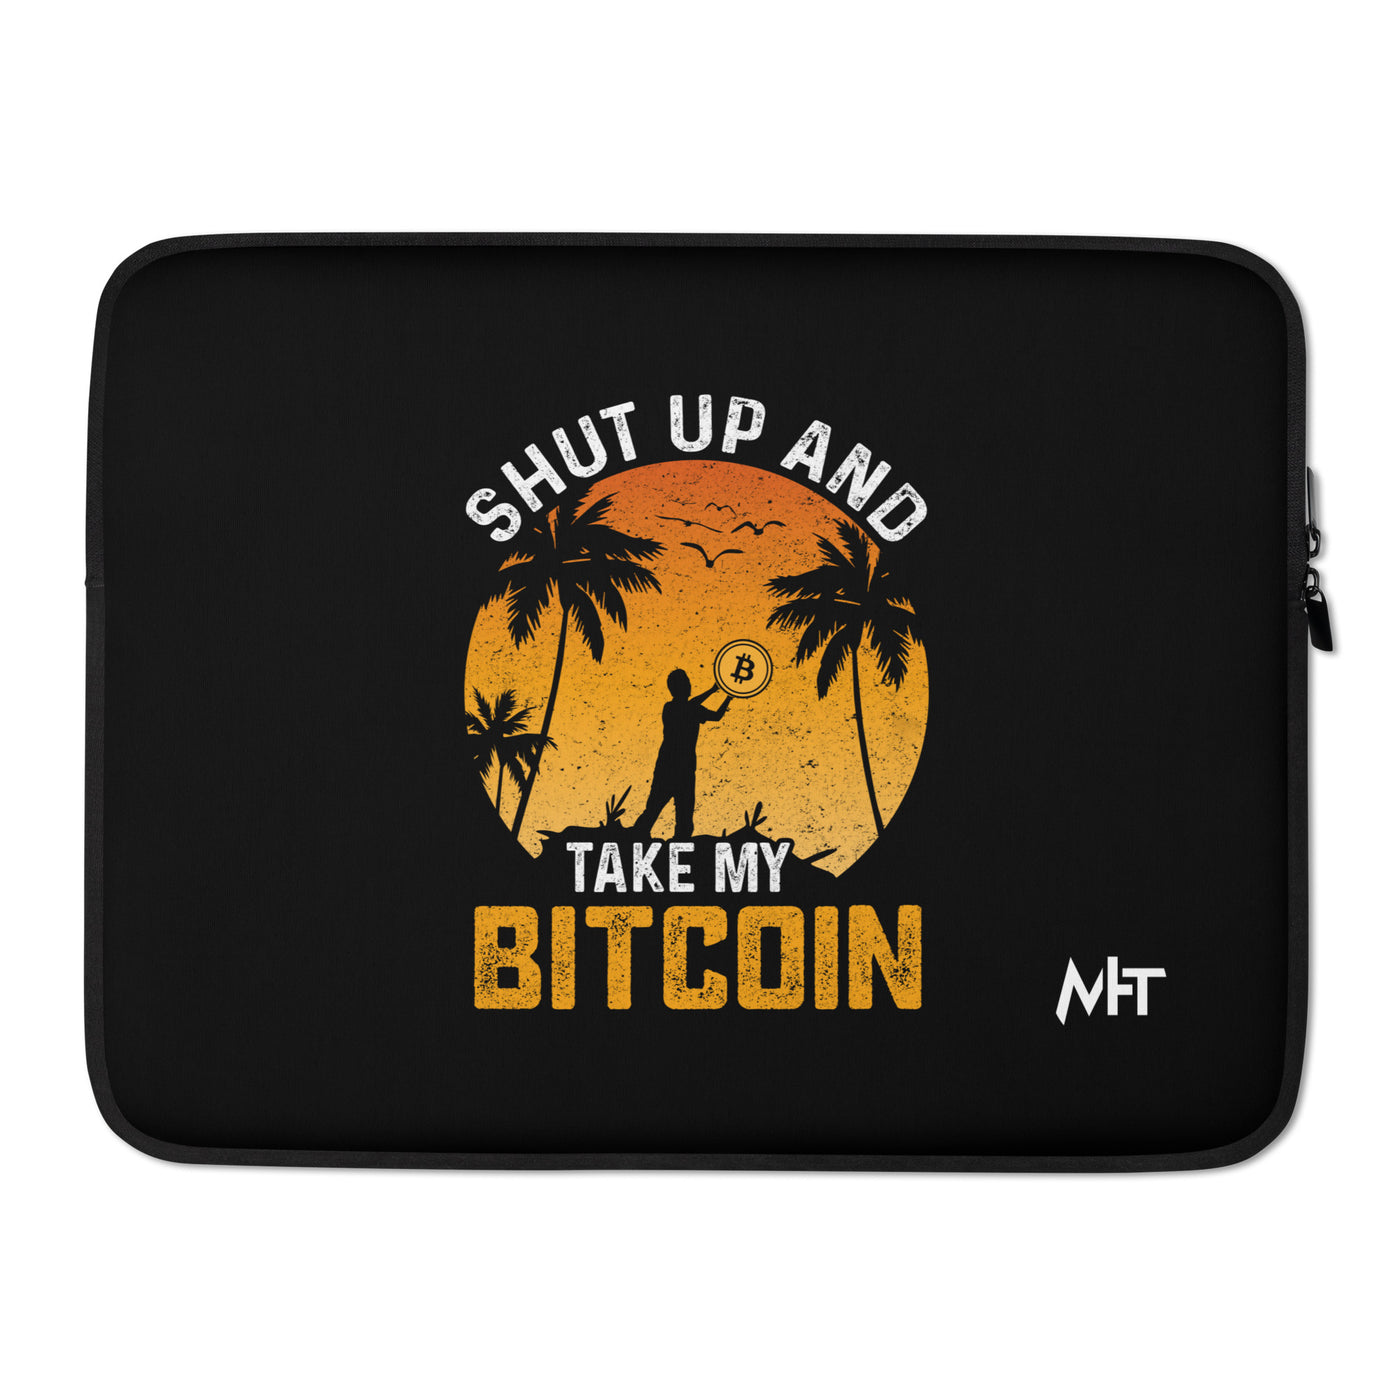 Shut Up and Take my Bitcoin - Laptop Sleeve